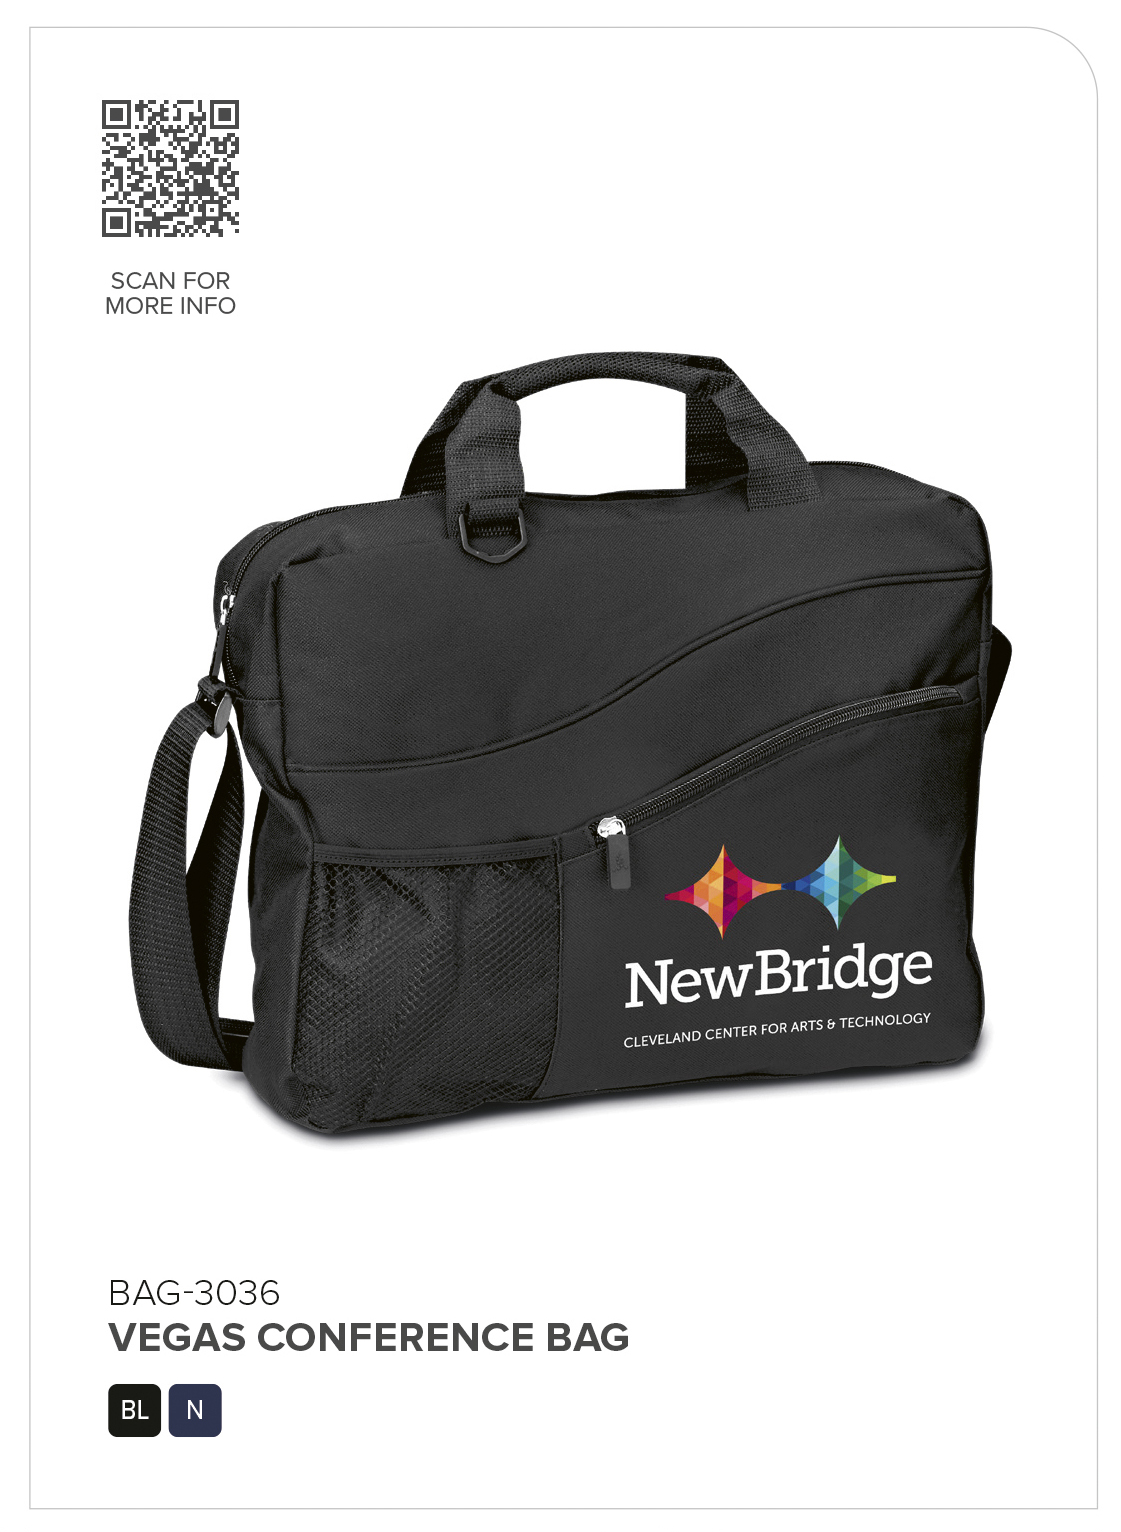 BAG-3036 - Vegas Conference Bag - Catalogue Image